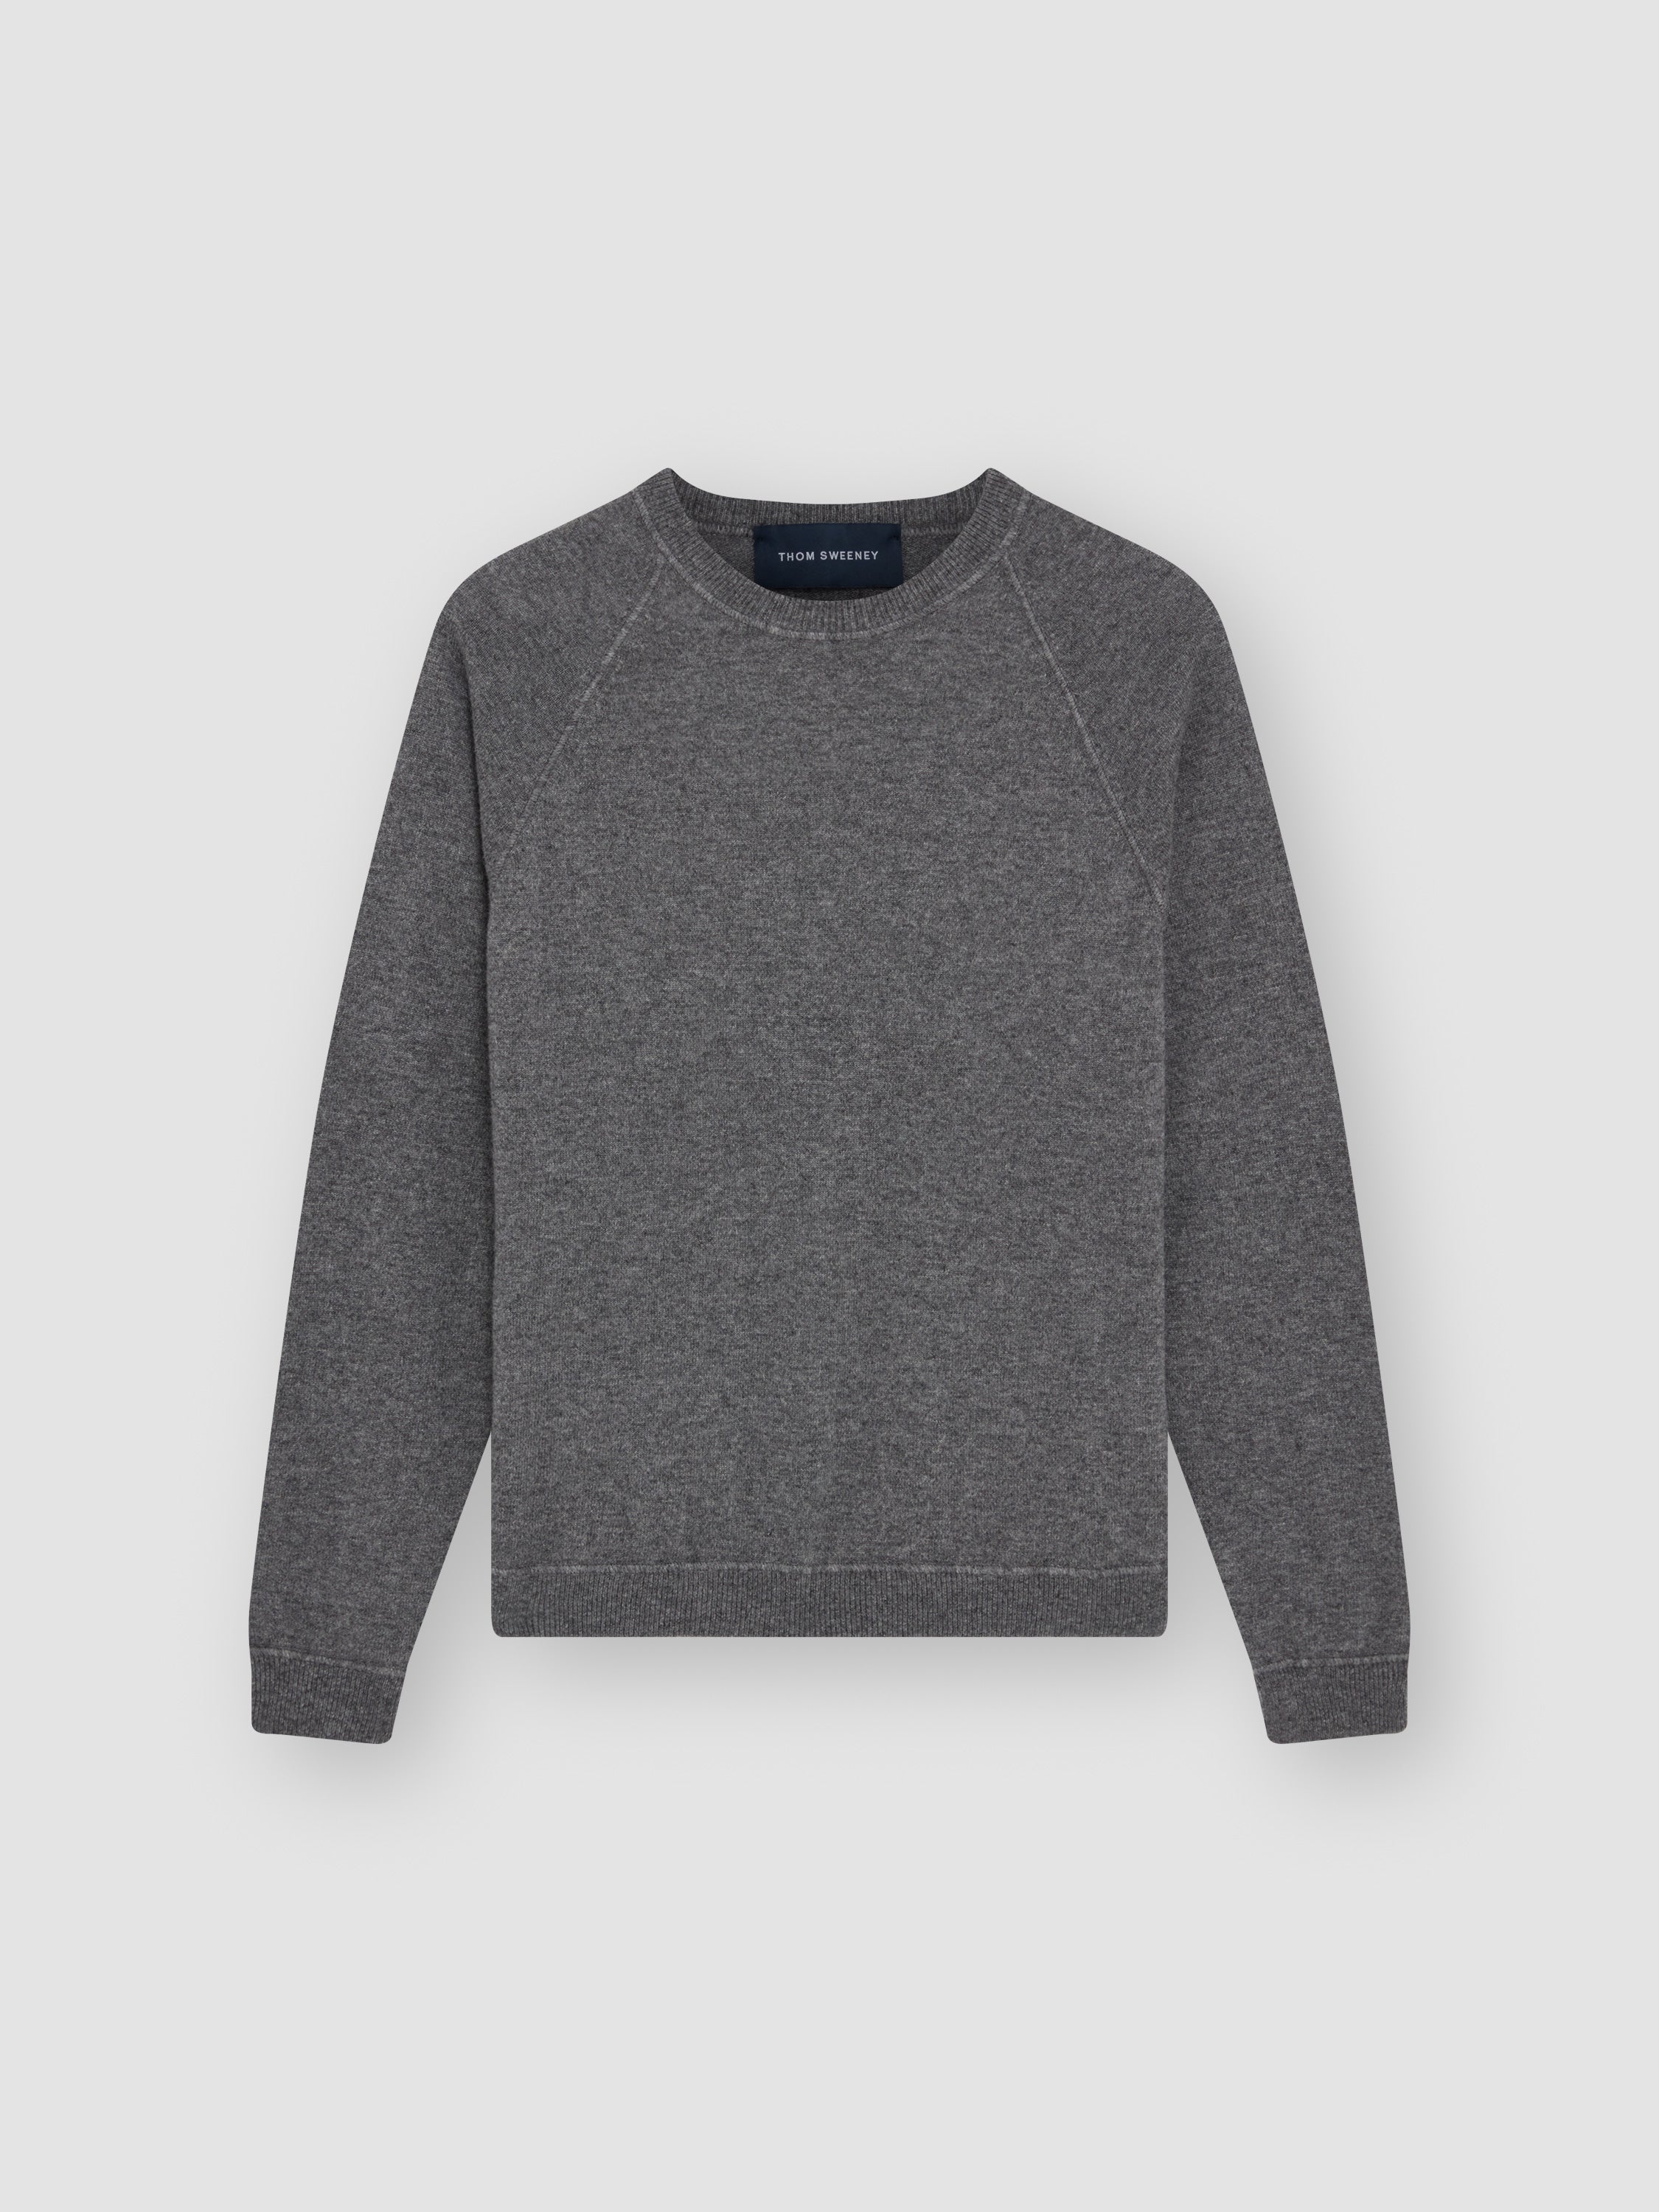 Wool Cashmere Raglan Crew Neck Sweater Grey Product Image